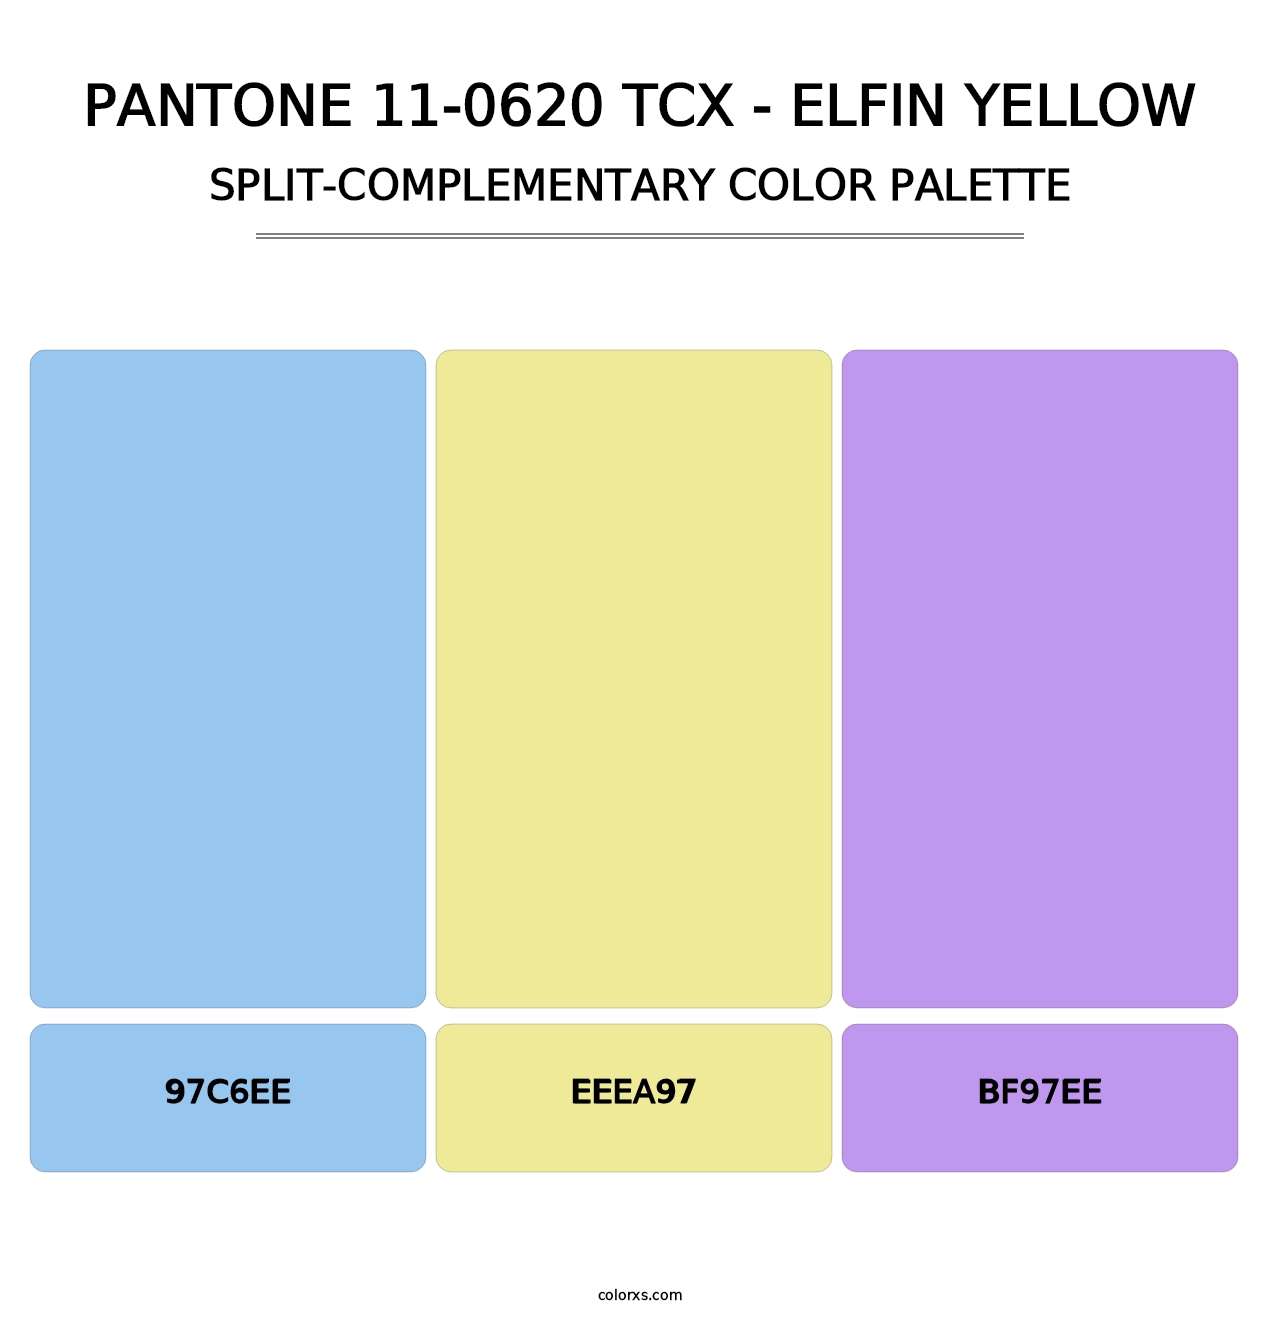 PANTONE 11-0620 TCX - Elfin Yellow - Split-Complementary Color Palette